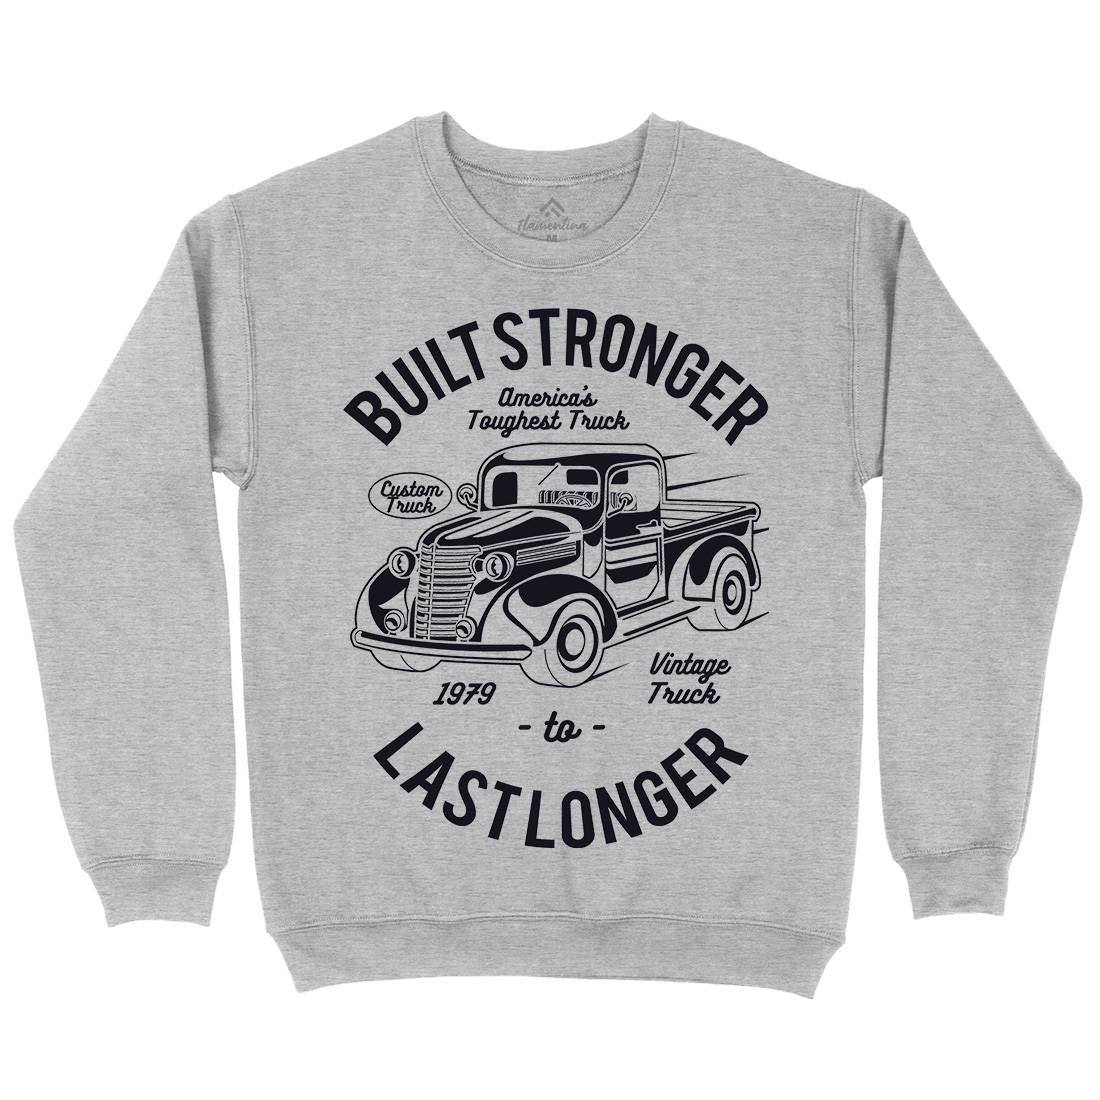 Built Stronger Kids Crew Neck Sweatshirt Cars A023